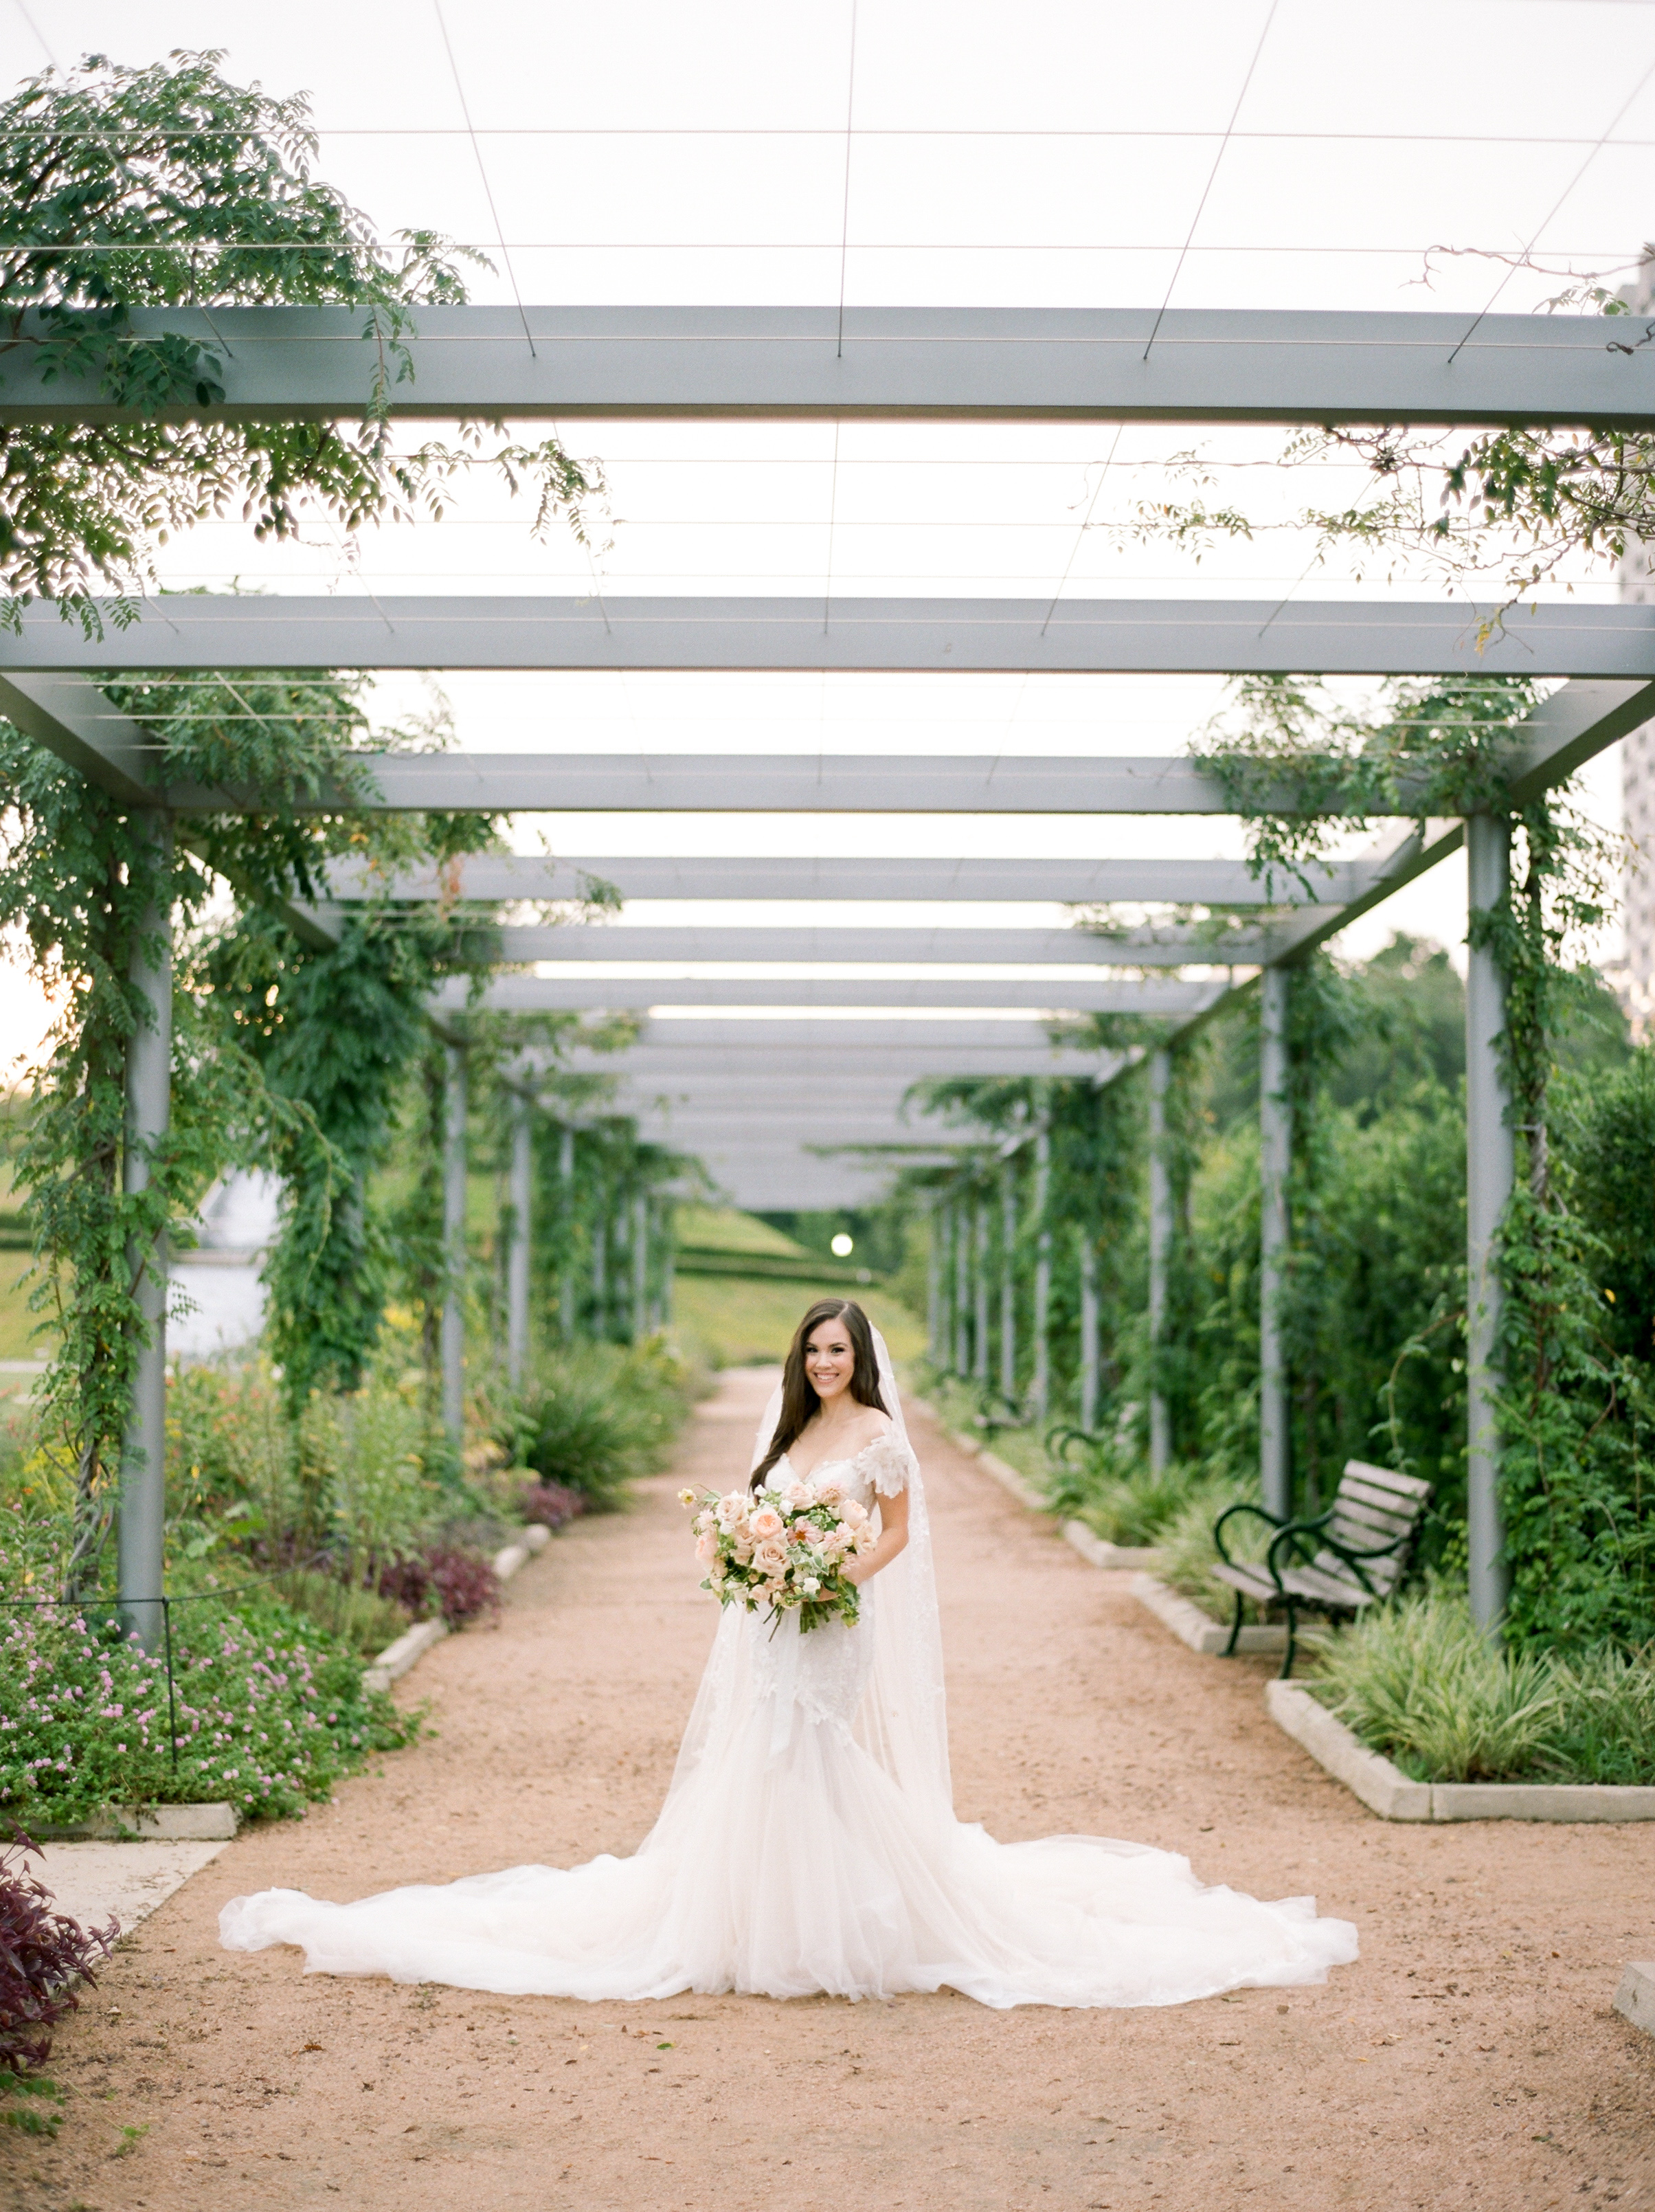 Fine-Art-Film-Houston-Wedding-Photographer-Best-Top-Luxury-Texas-Austin-Dallas-Destination-Dana-Fernandez-Photography-Portrait-Bridals-McGovern-Centennial-Gardens-1.jpg